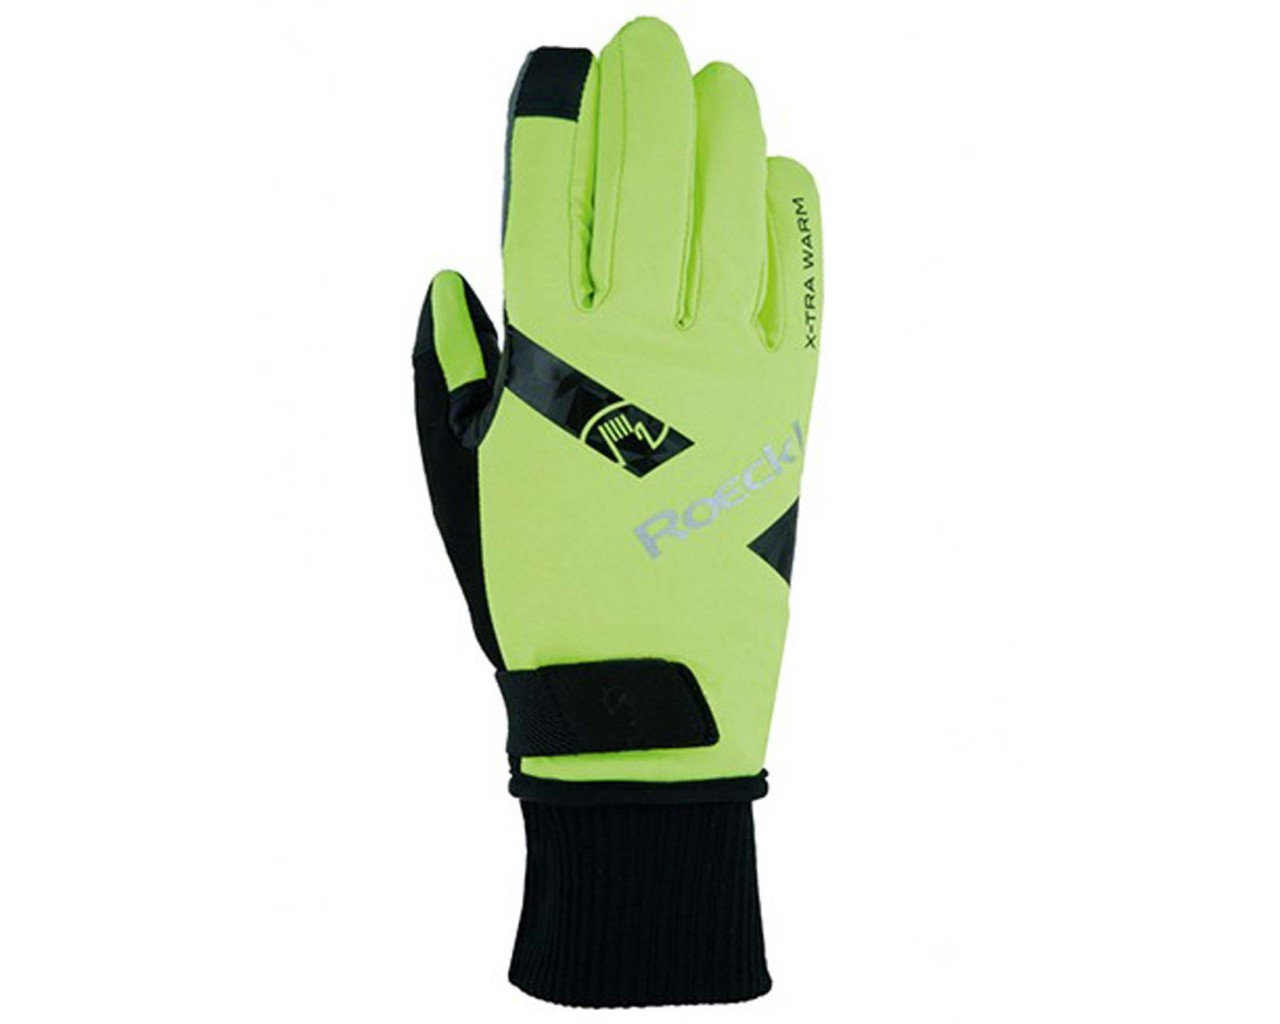 Roeckl Vaduz GTX Gloves long fingers | neon yellow